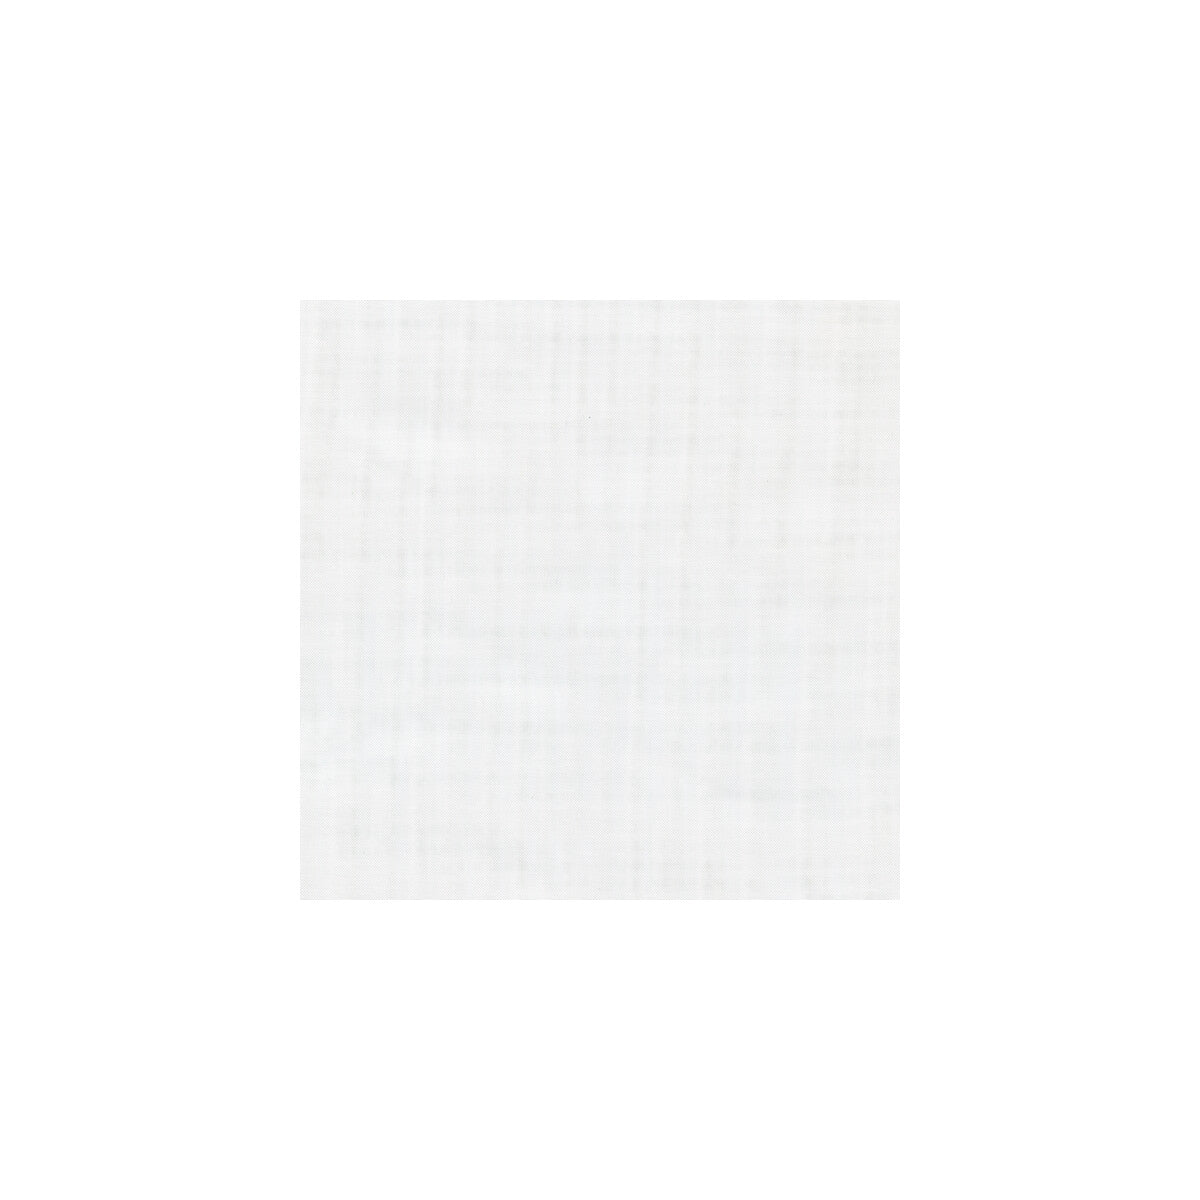 Kravet Basics fabric in 3713-101 color - pattern 3713.101.0 - by Kravet Basics in the Gis collection